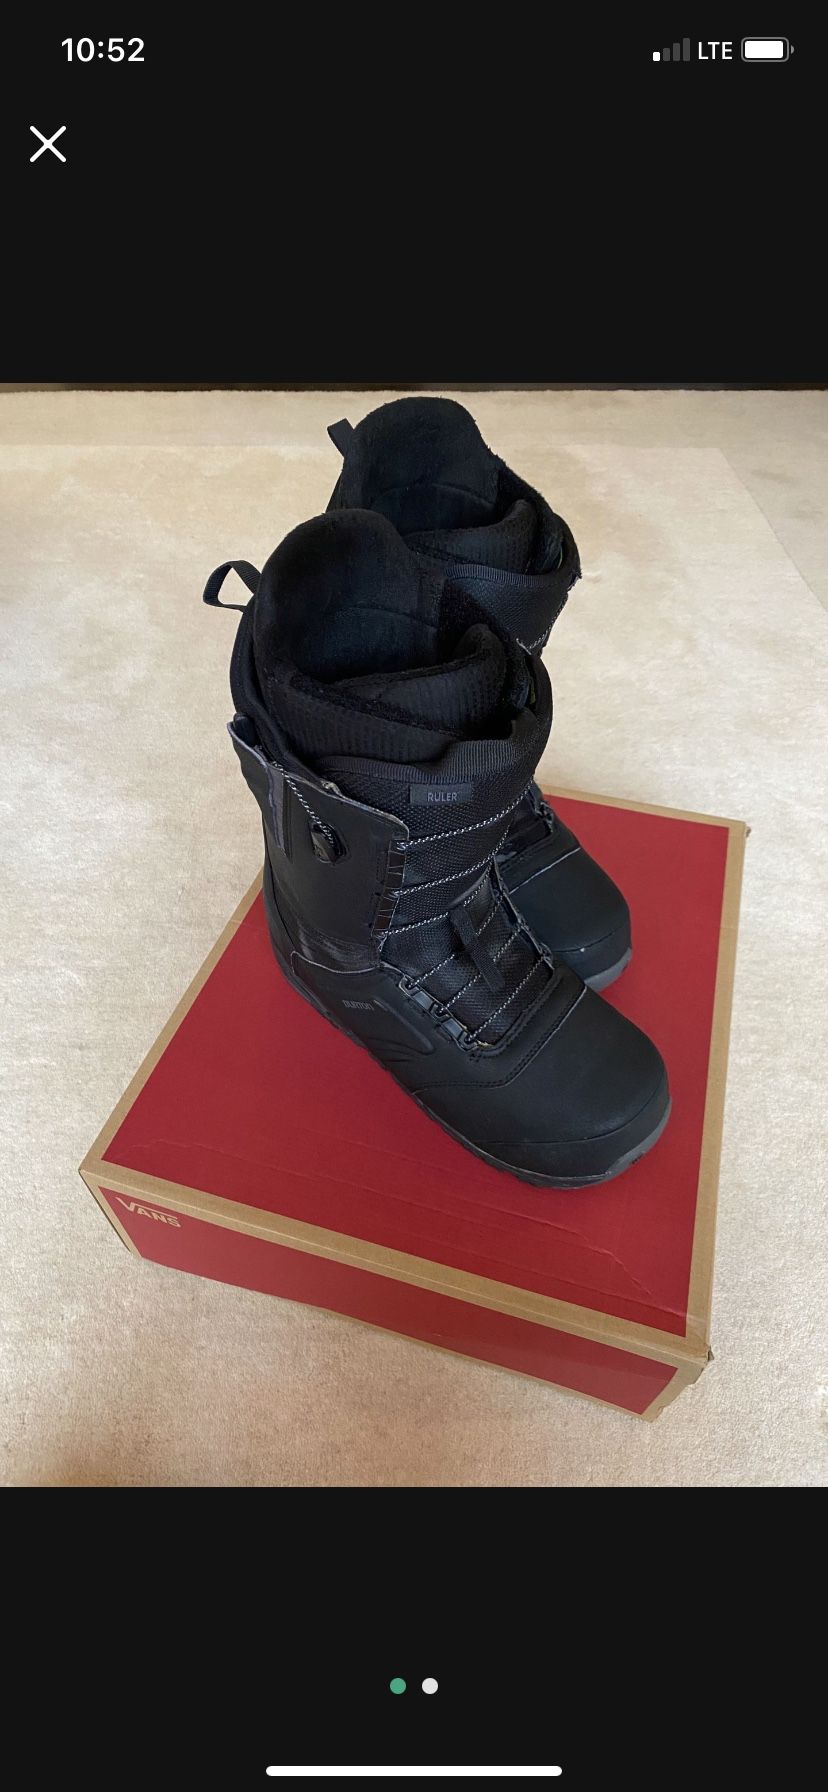 Men’s Burton Ruler Snowboard Boots - Size 12